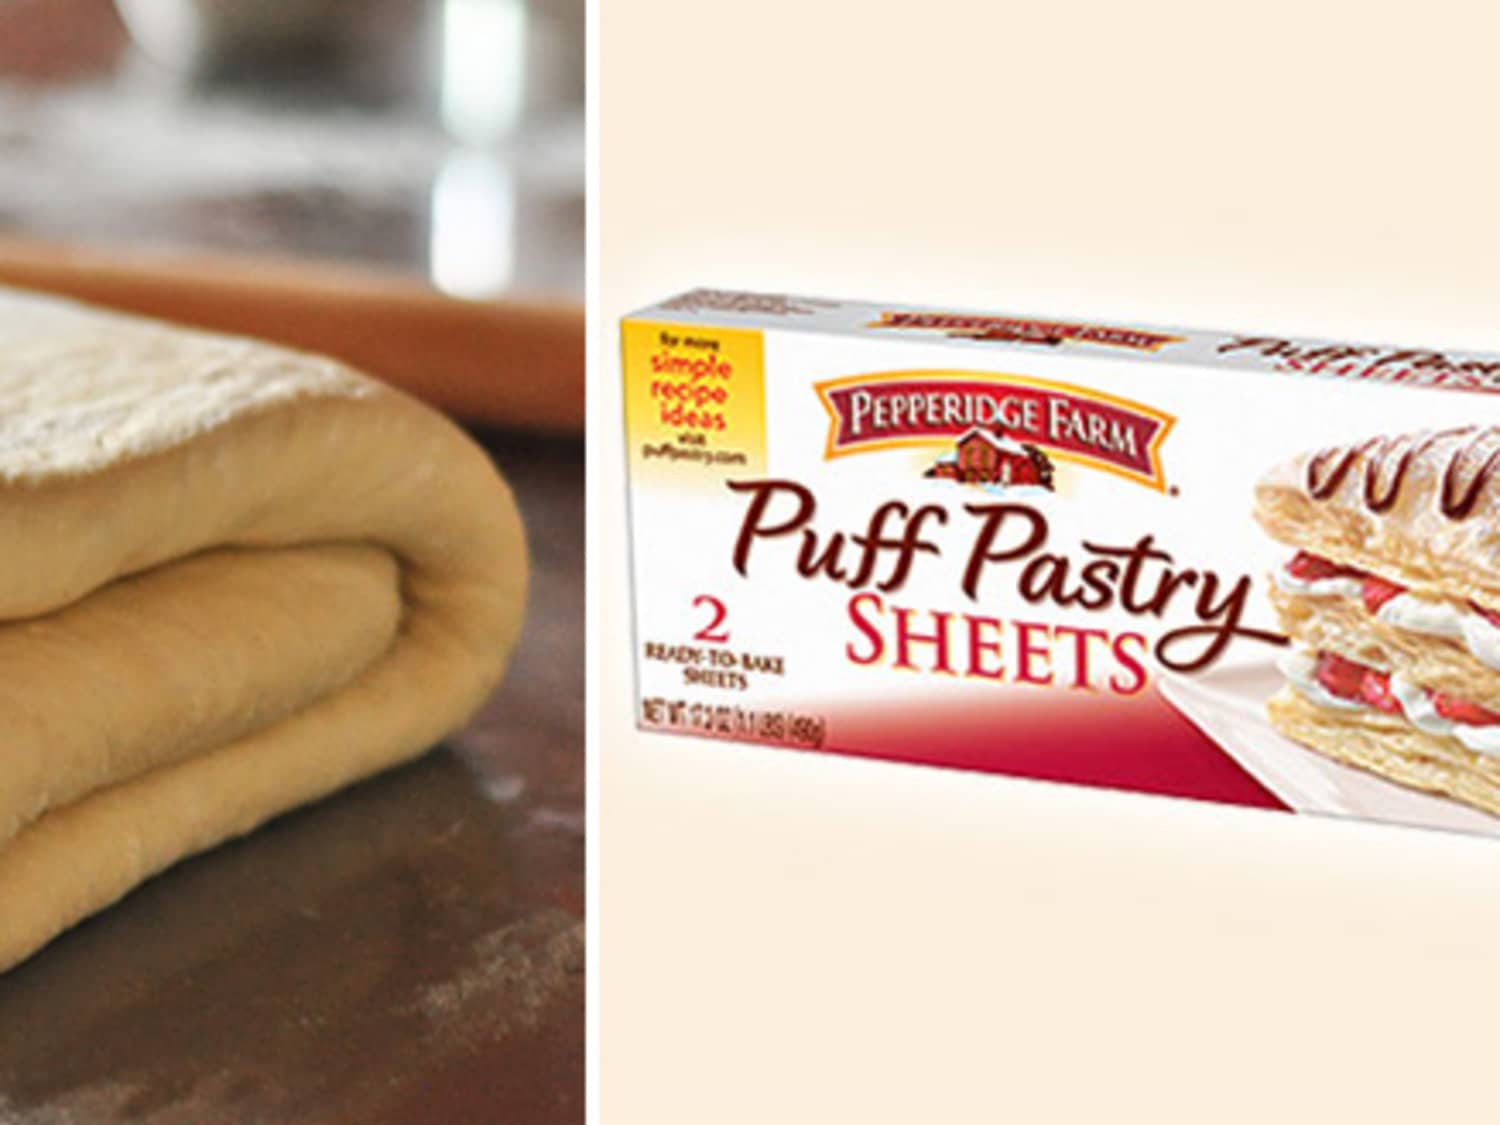 Frozen Sheets Pastry Dough - Pepperidge Farm